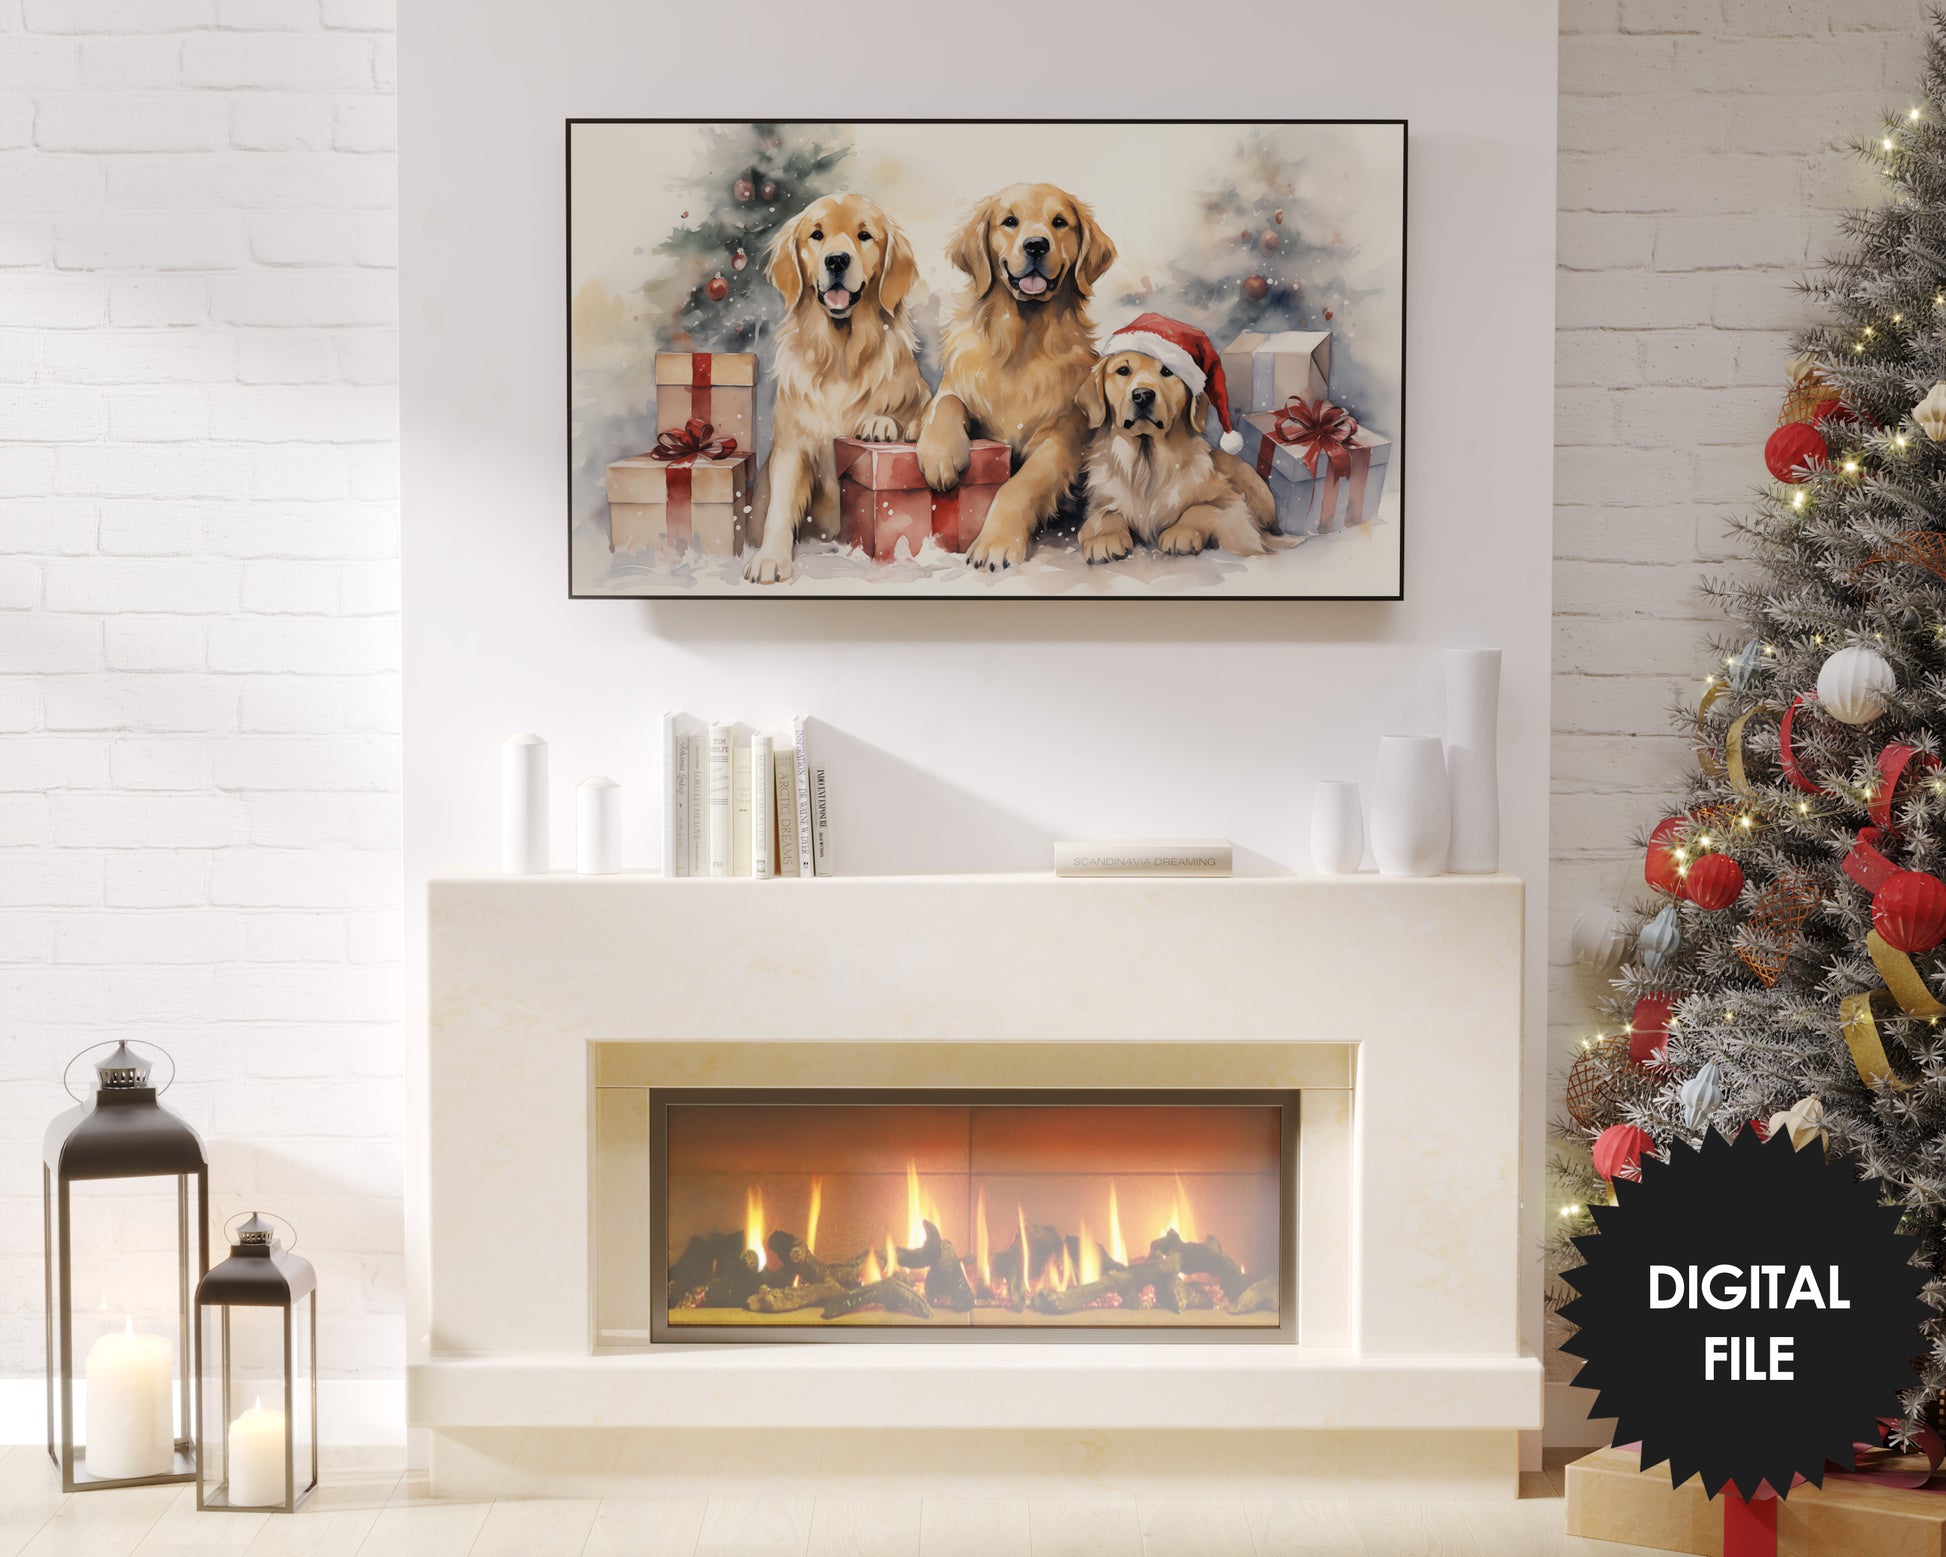 Christmas Retrievers Frame TV Art preview on Samsung Frame TV in Christmas ambience